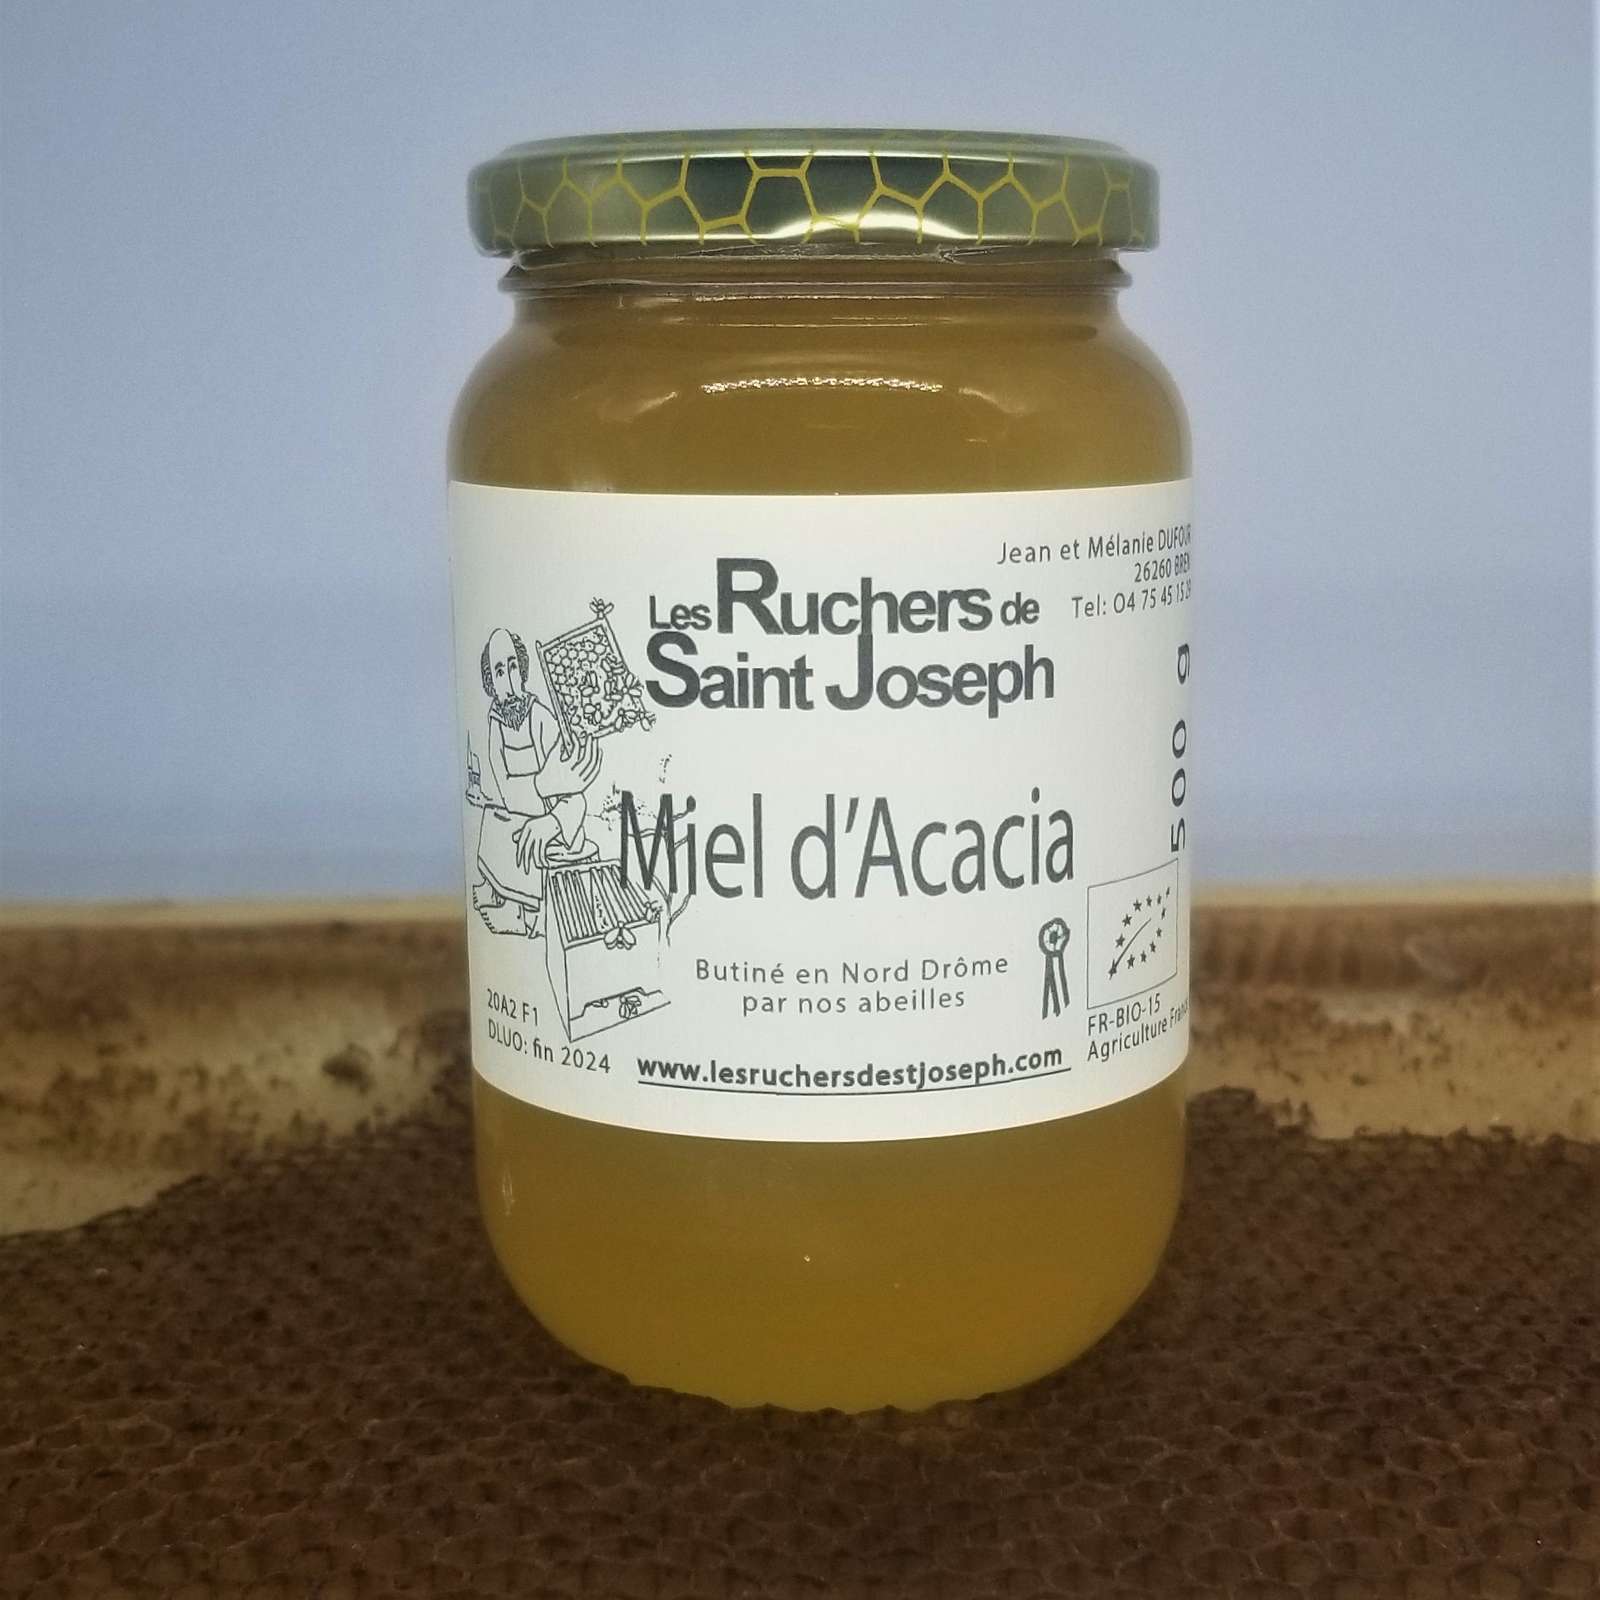 Miel d'Acacia  : Acacia